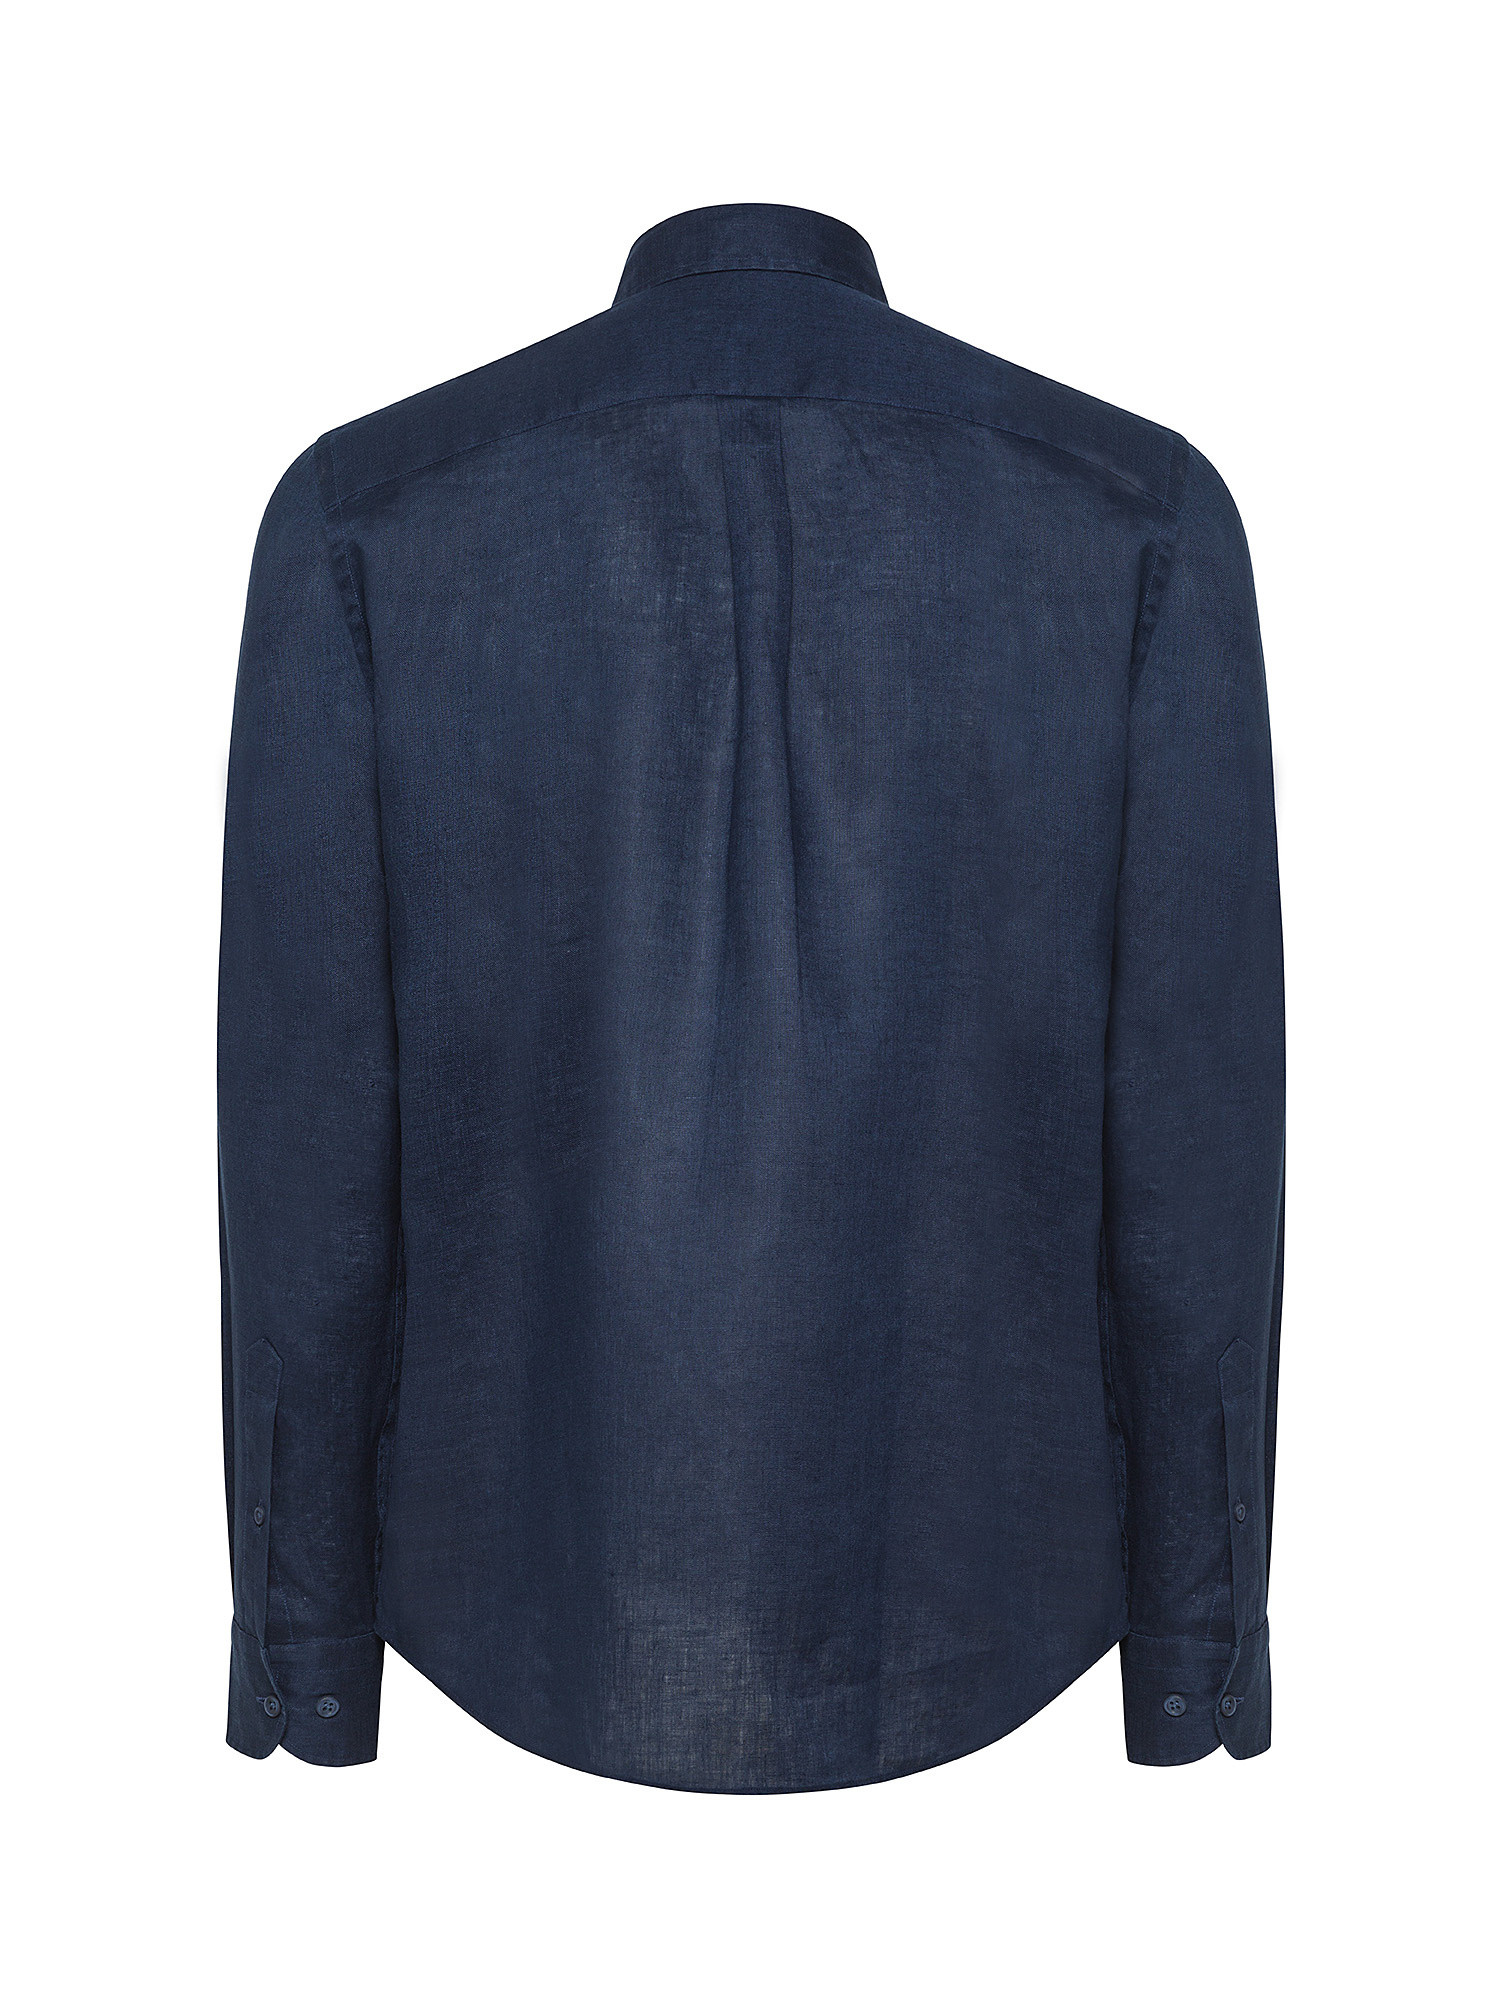 Luca D'Altieri - Tailor fit shirt in pure linen, Dark Blue, large image number 1